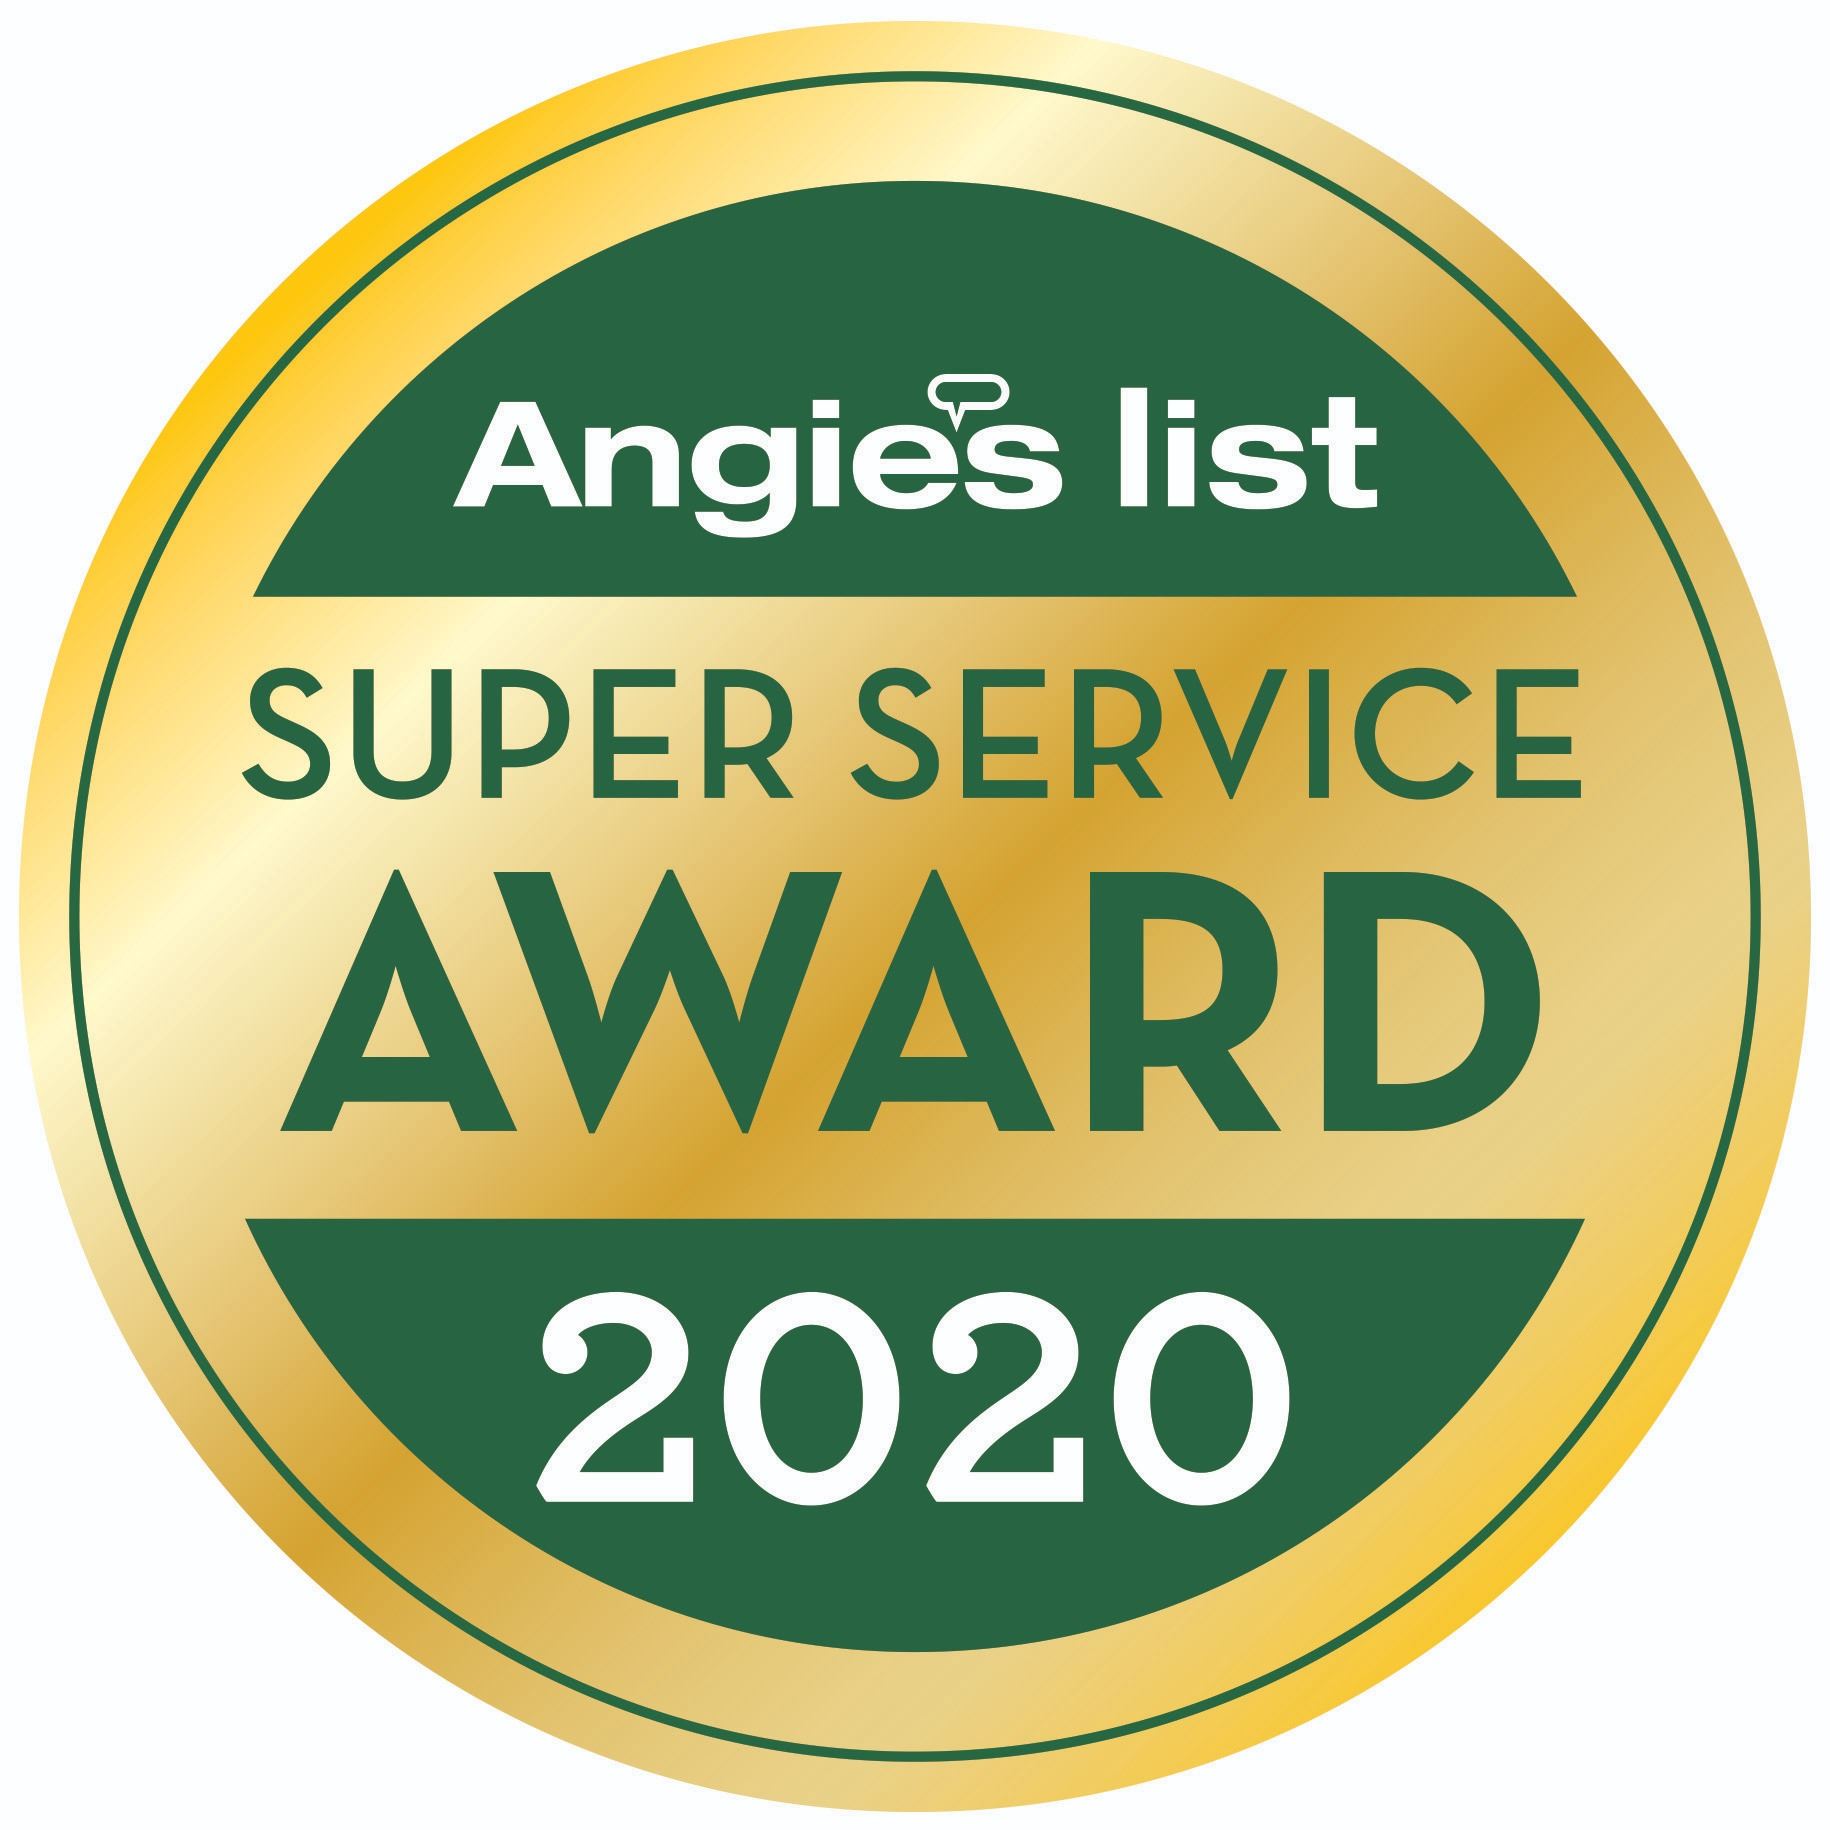 Super Service Award Badge